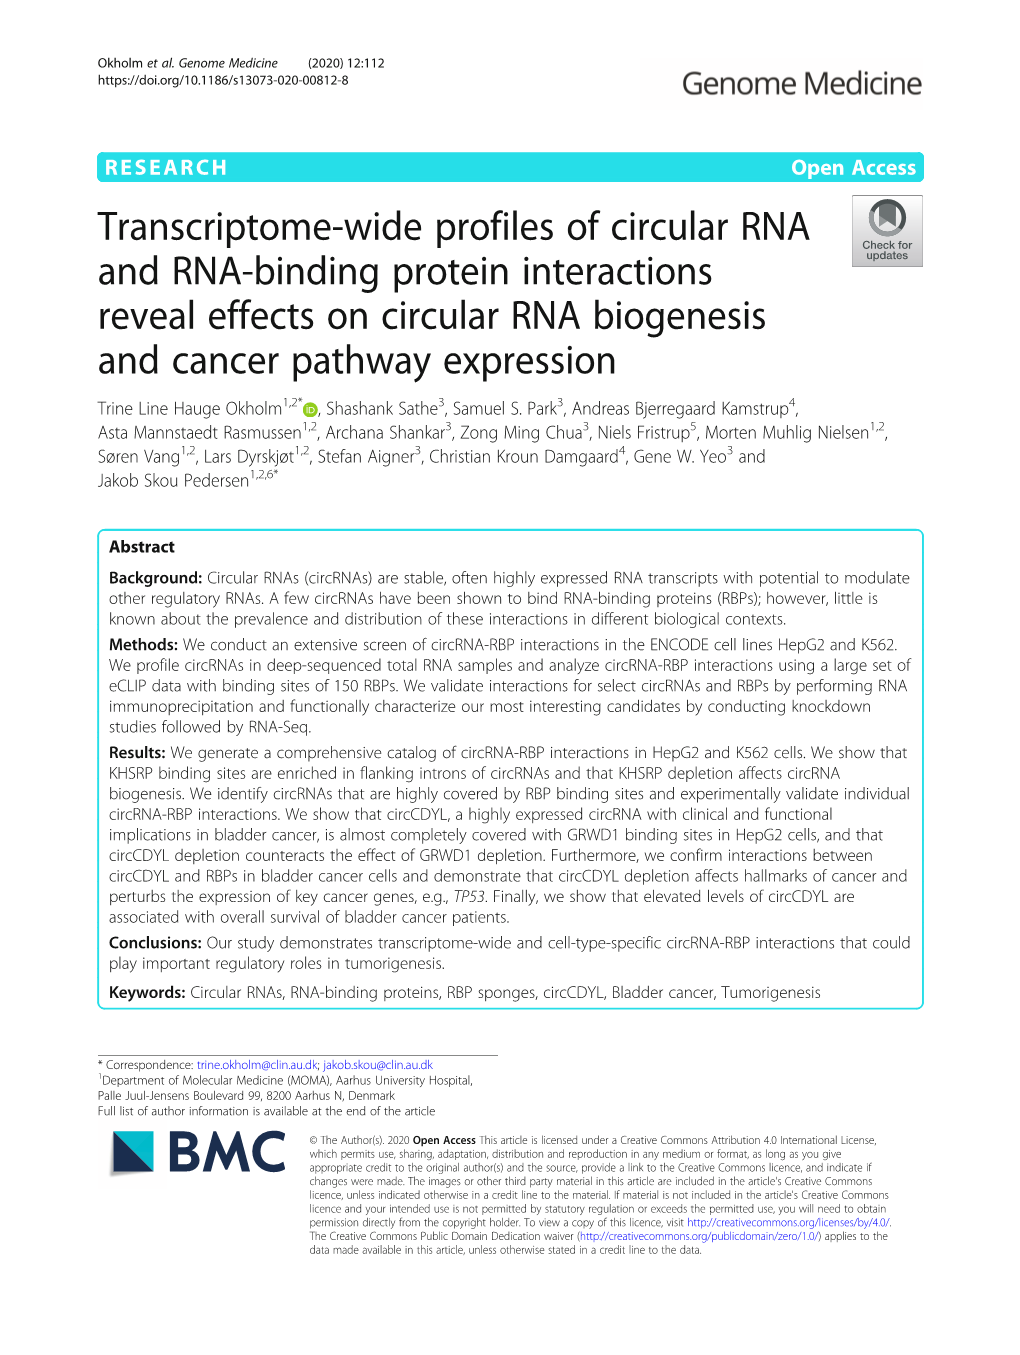 Transcriptome-Wide Profiles of Circular RNA and RNA-Binding Protein